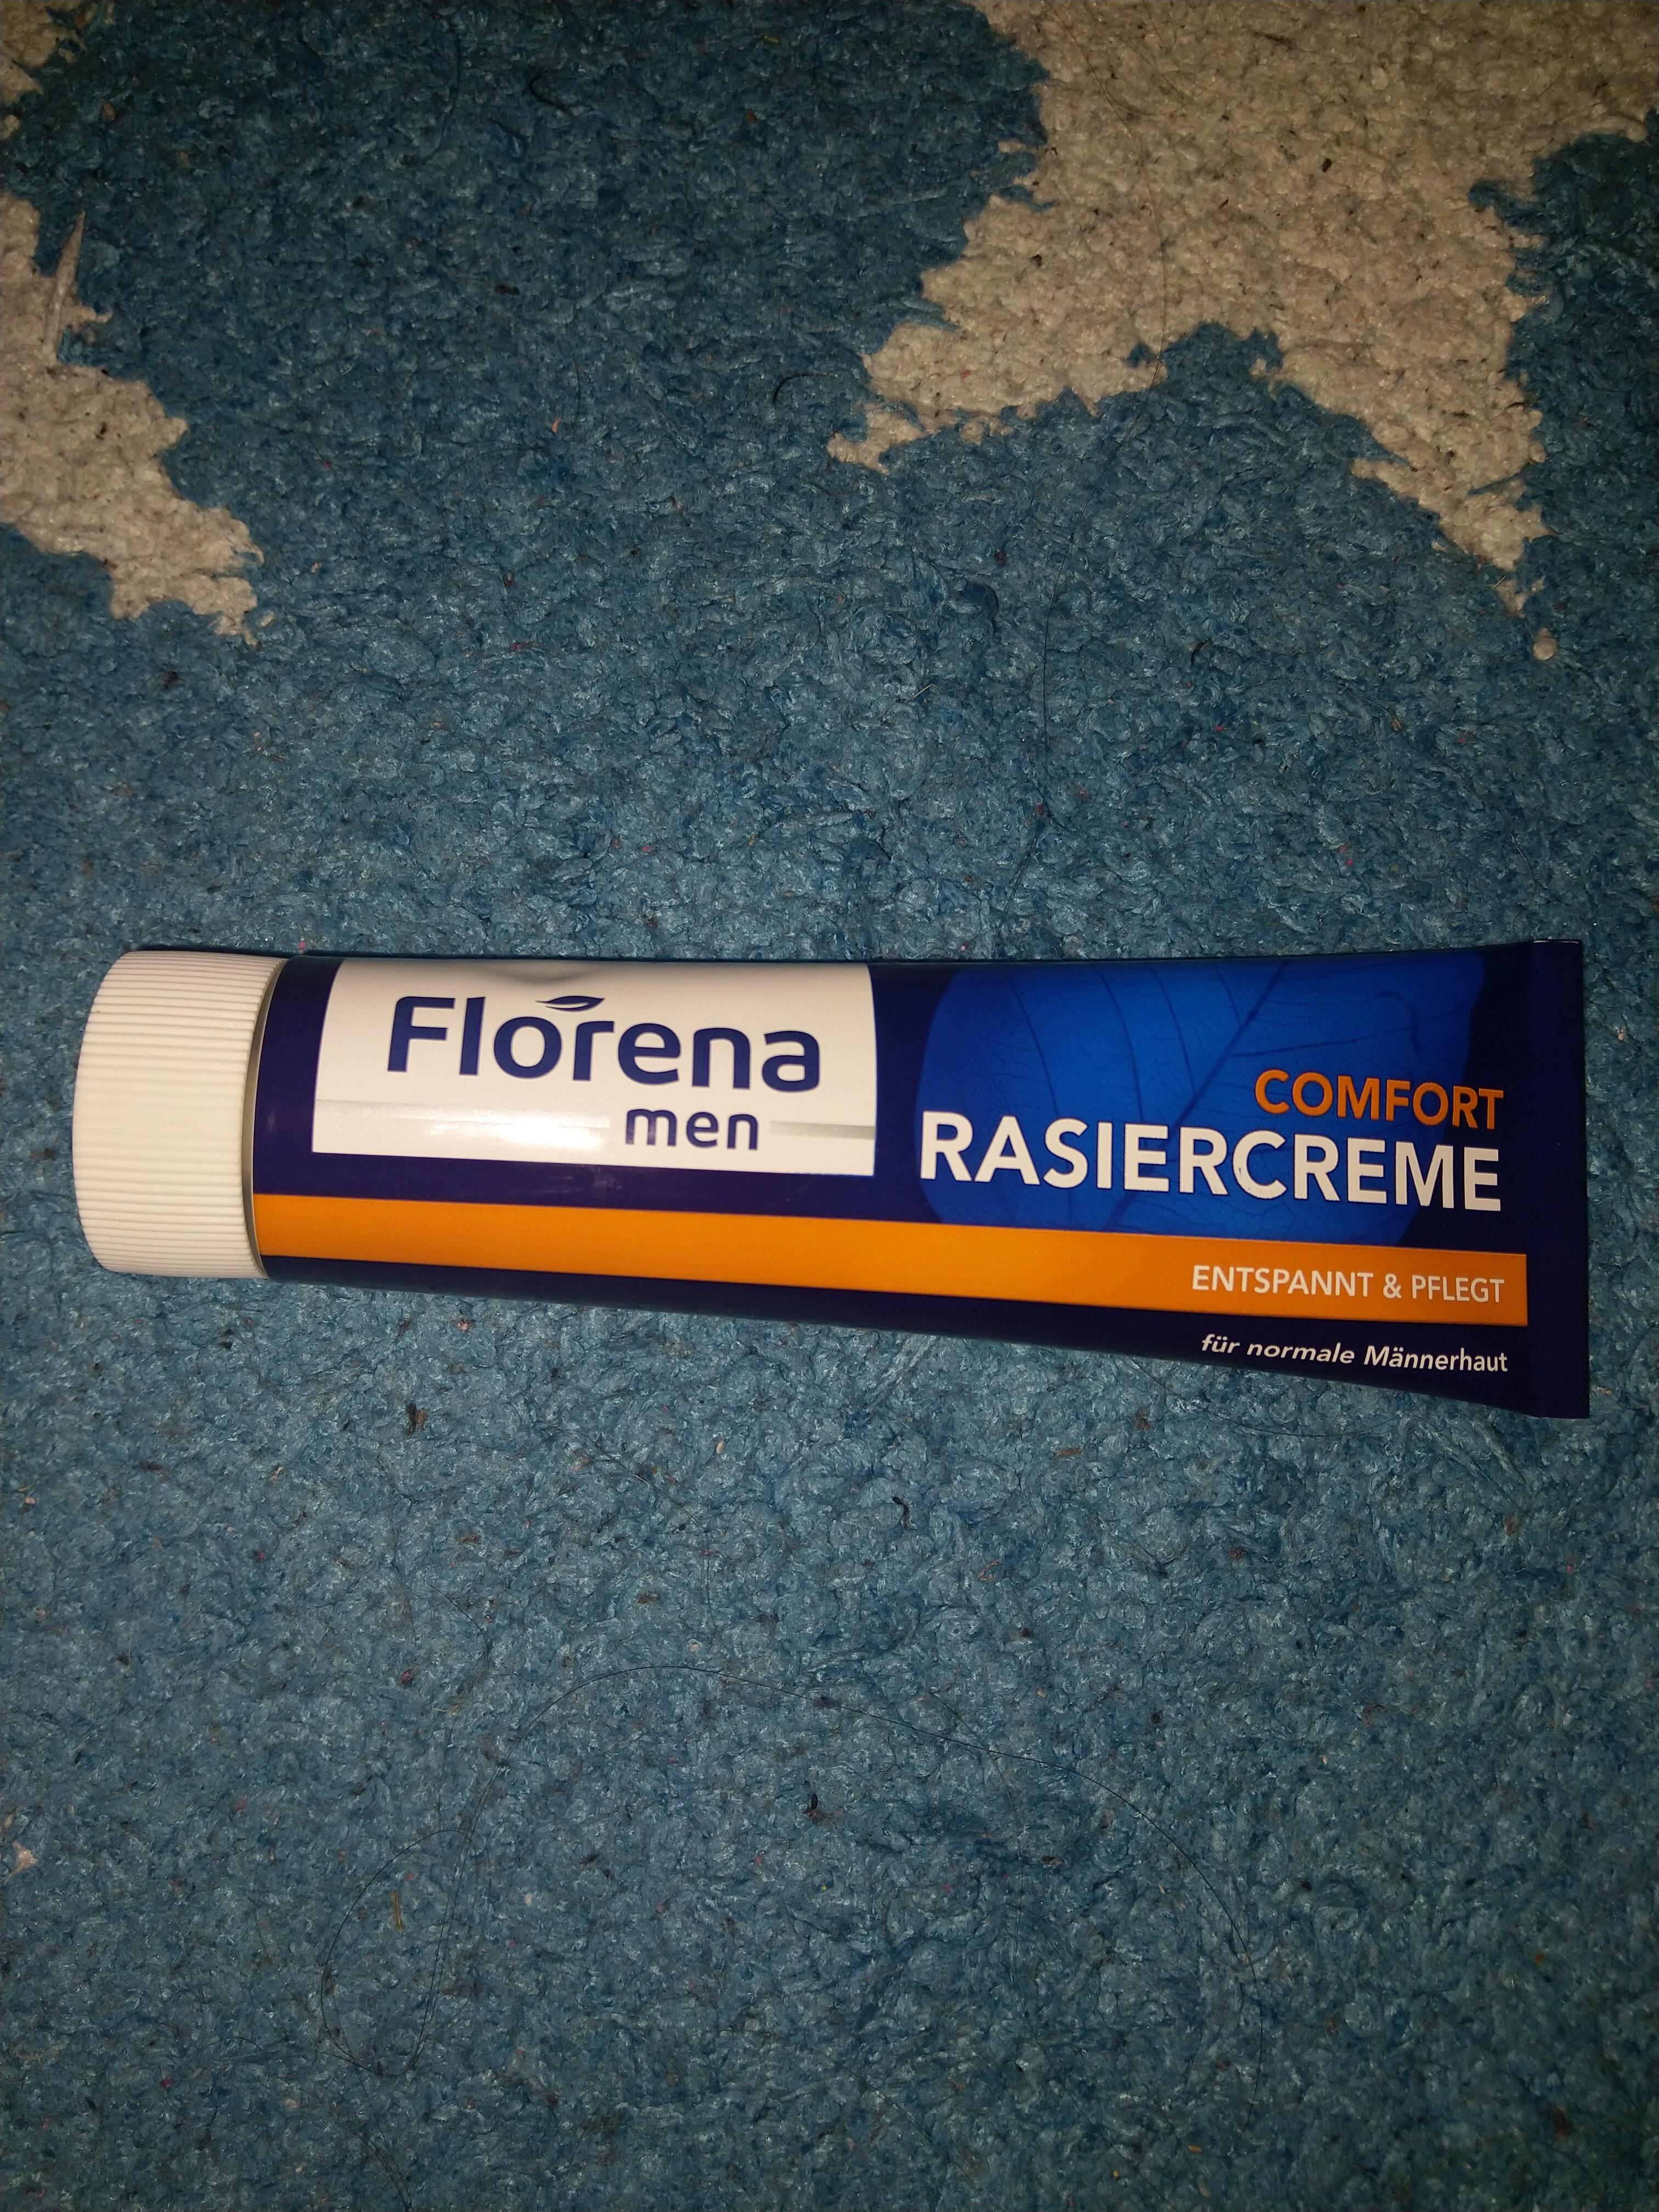 Florena comfort Rasiercreme - Product - de